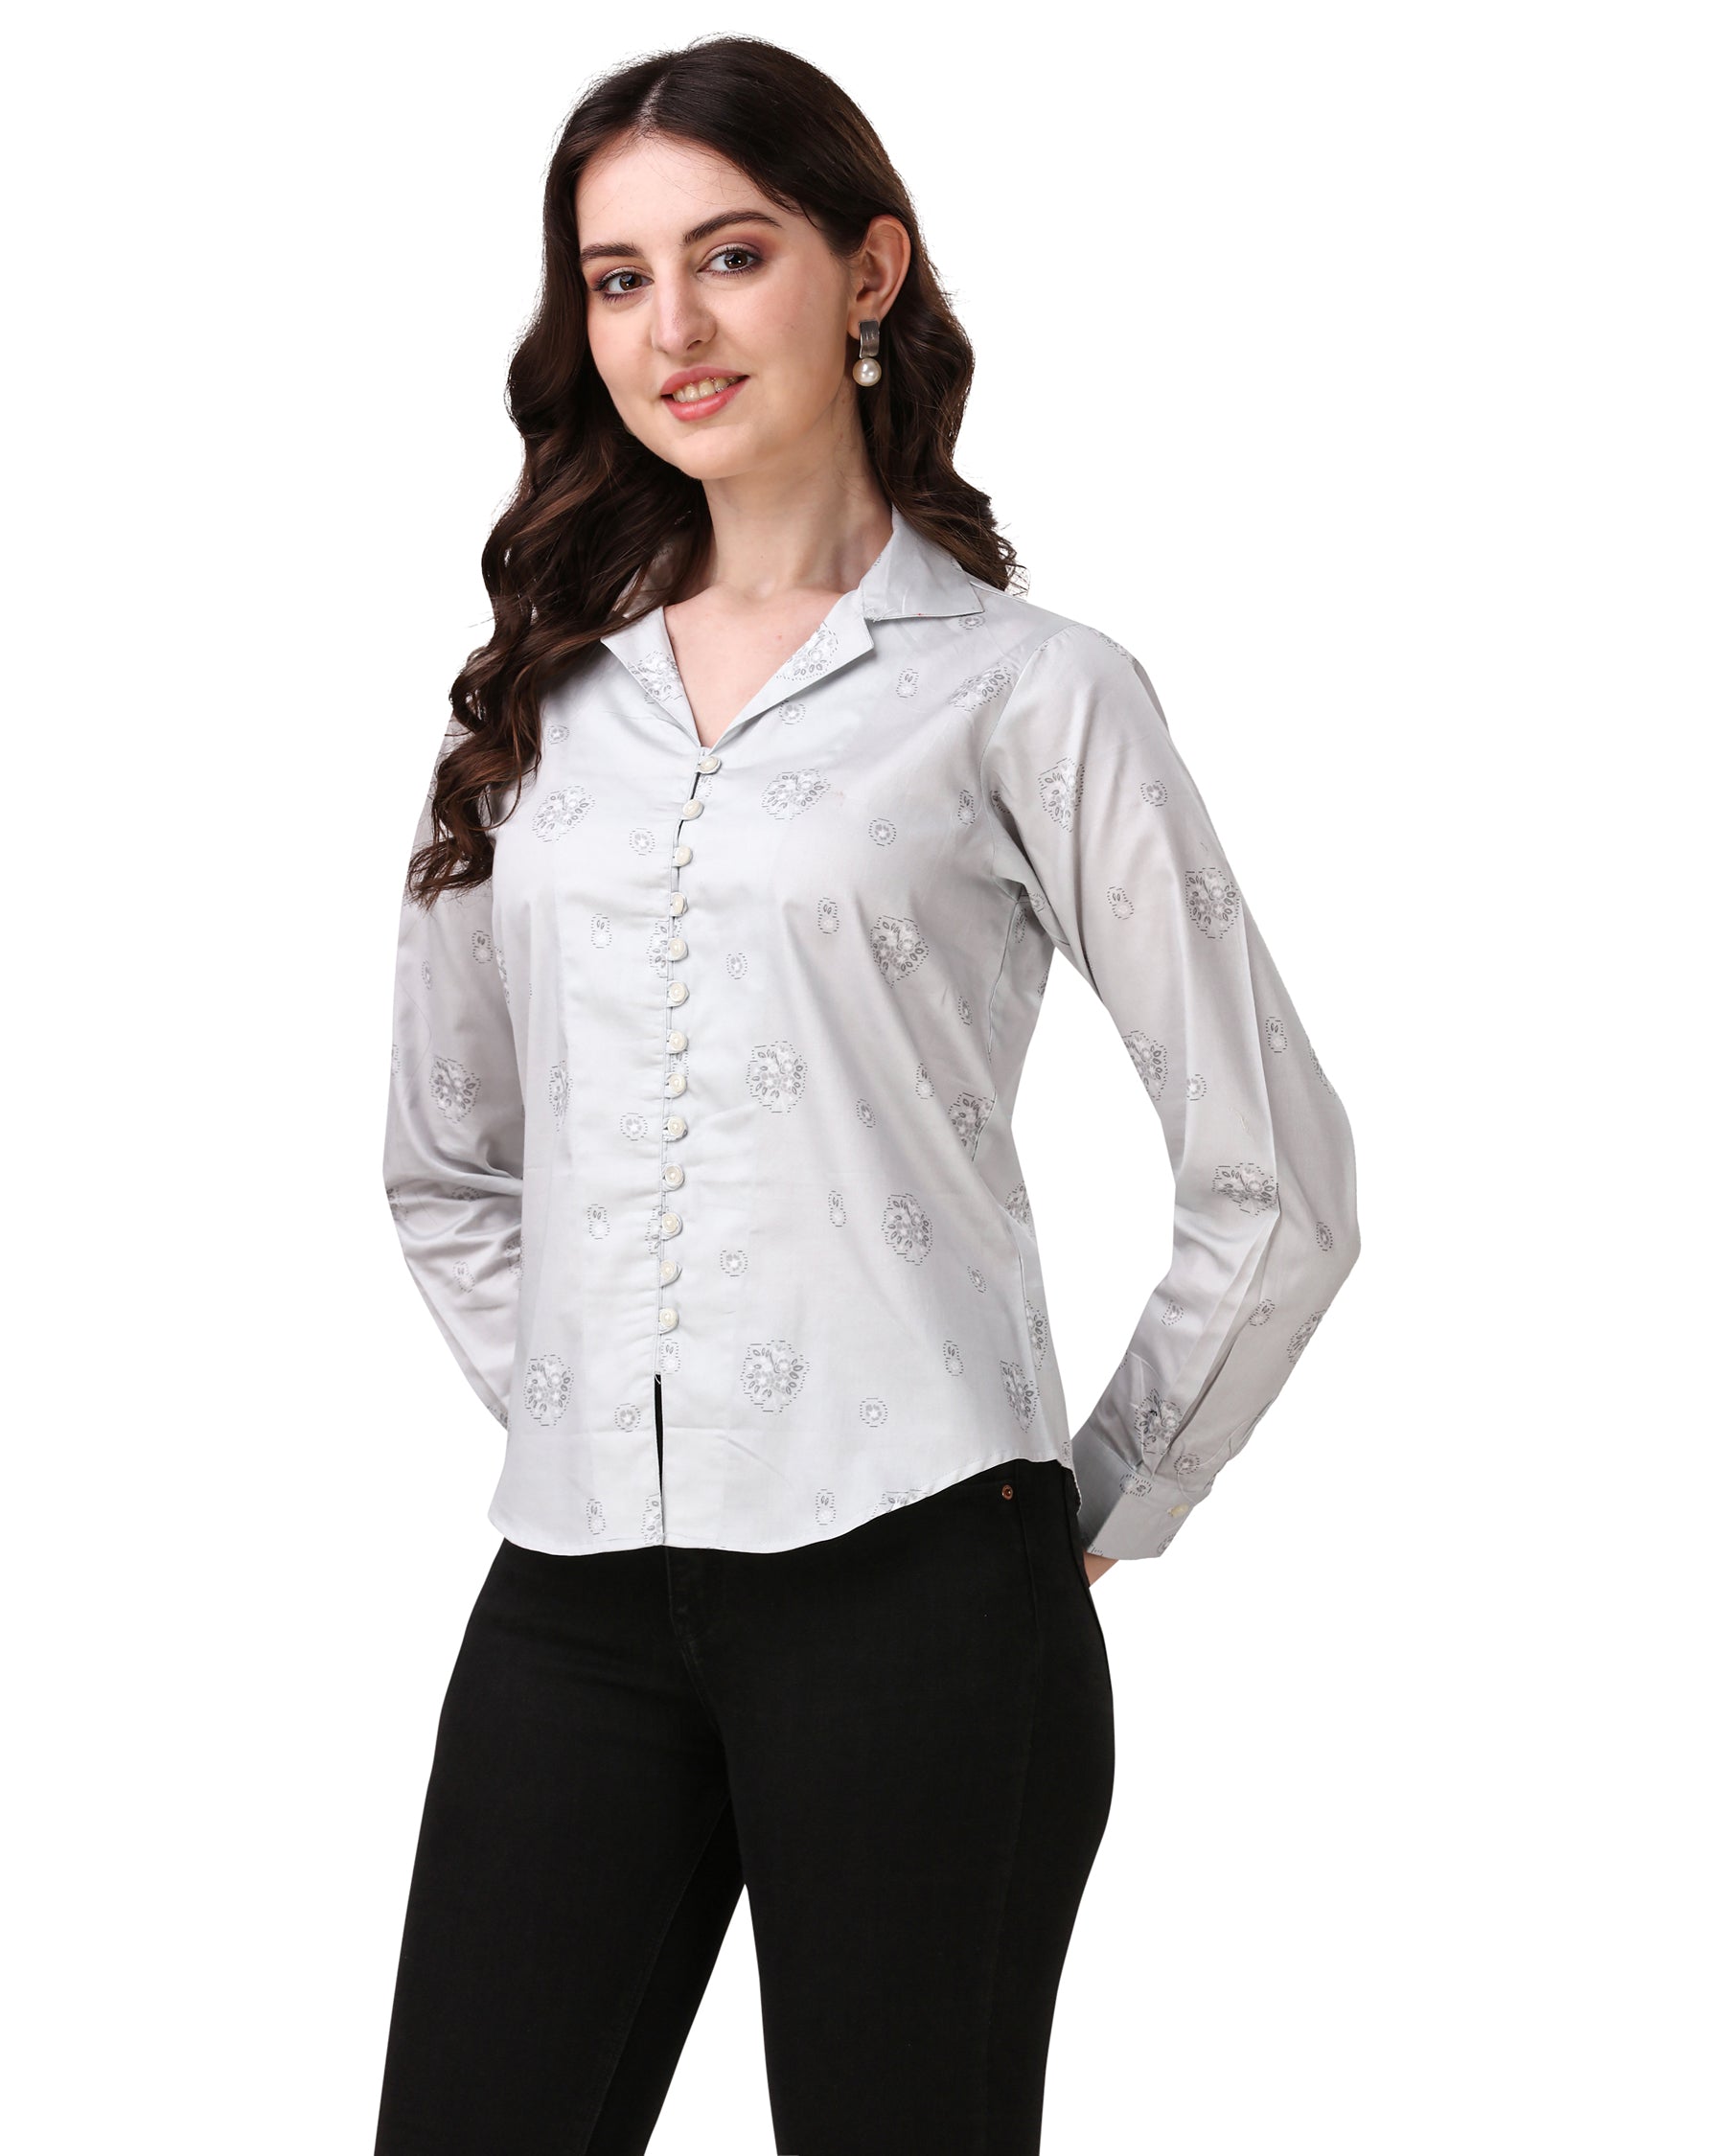 Timberwolf Gray with Printed Super Soft Premium Cotton Women’s Shirt